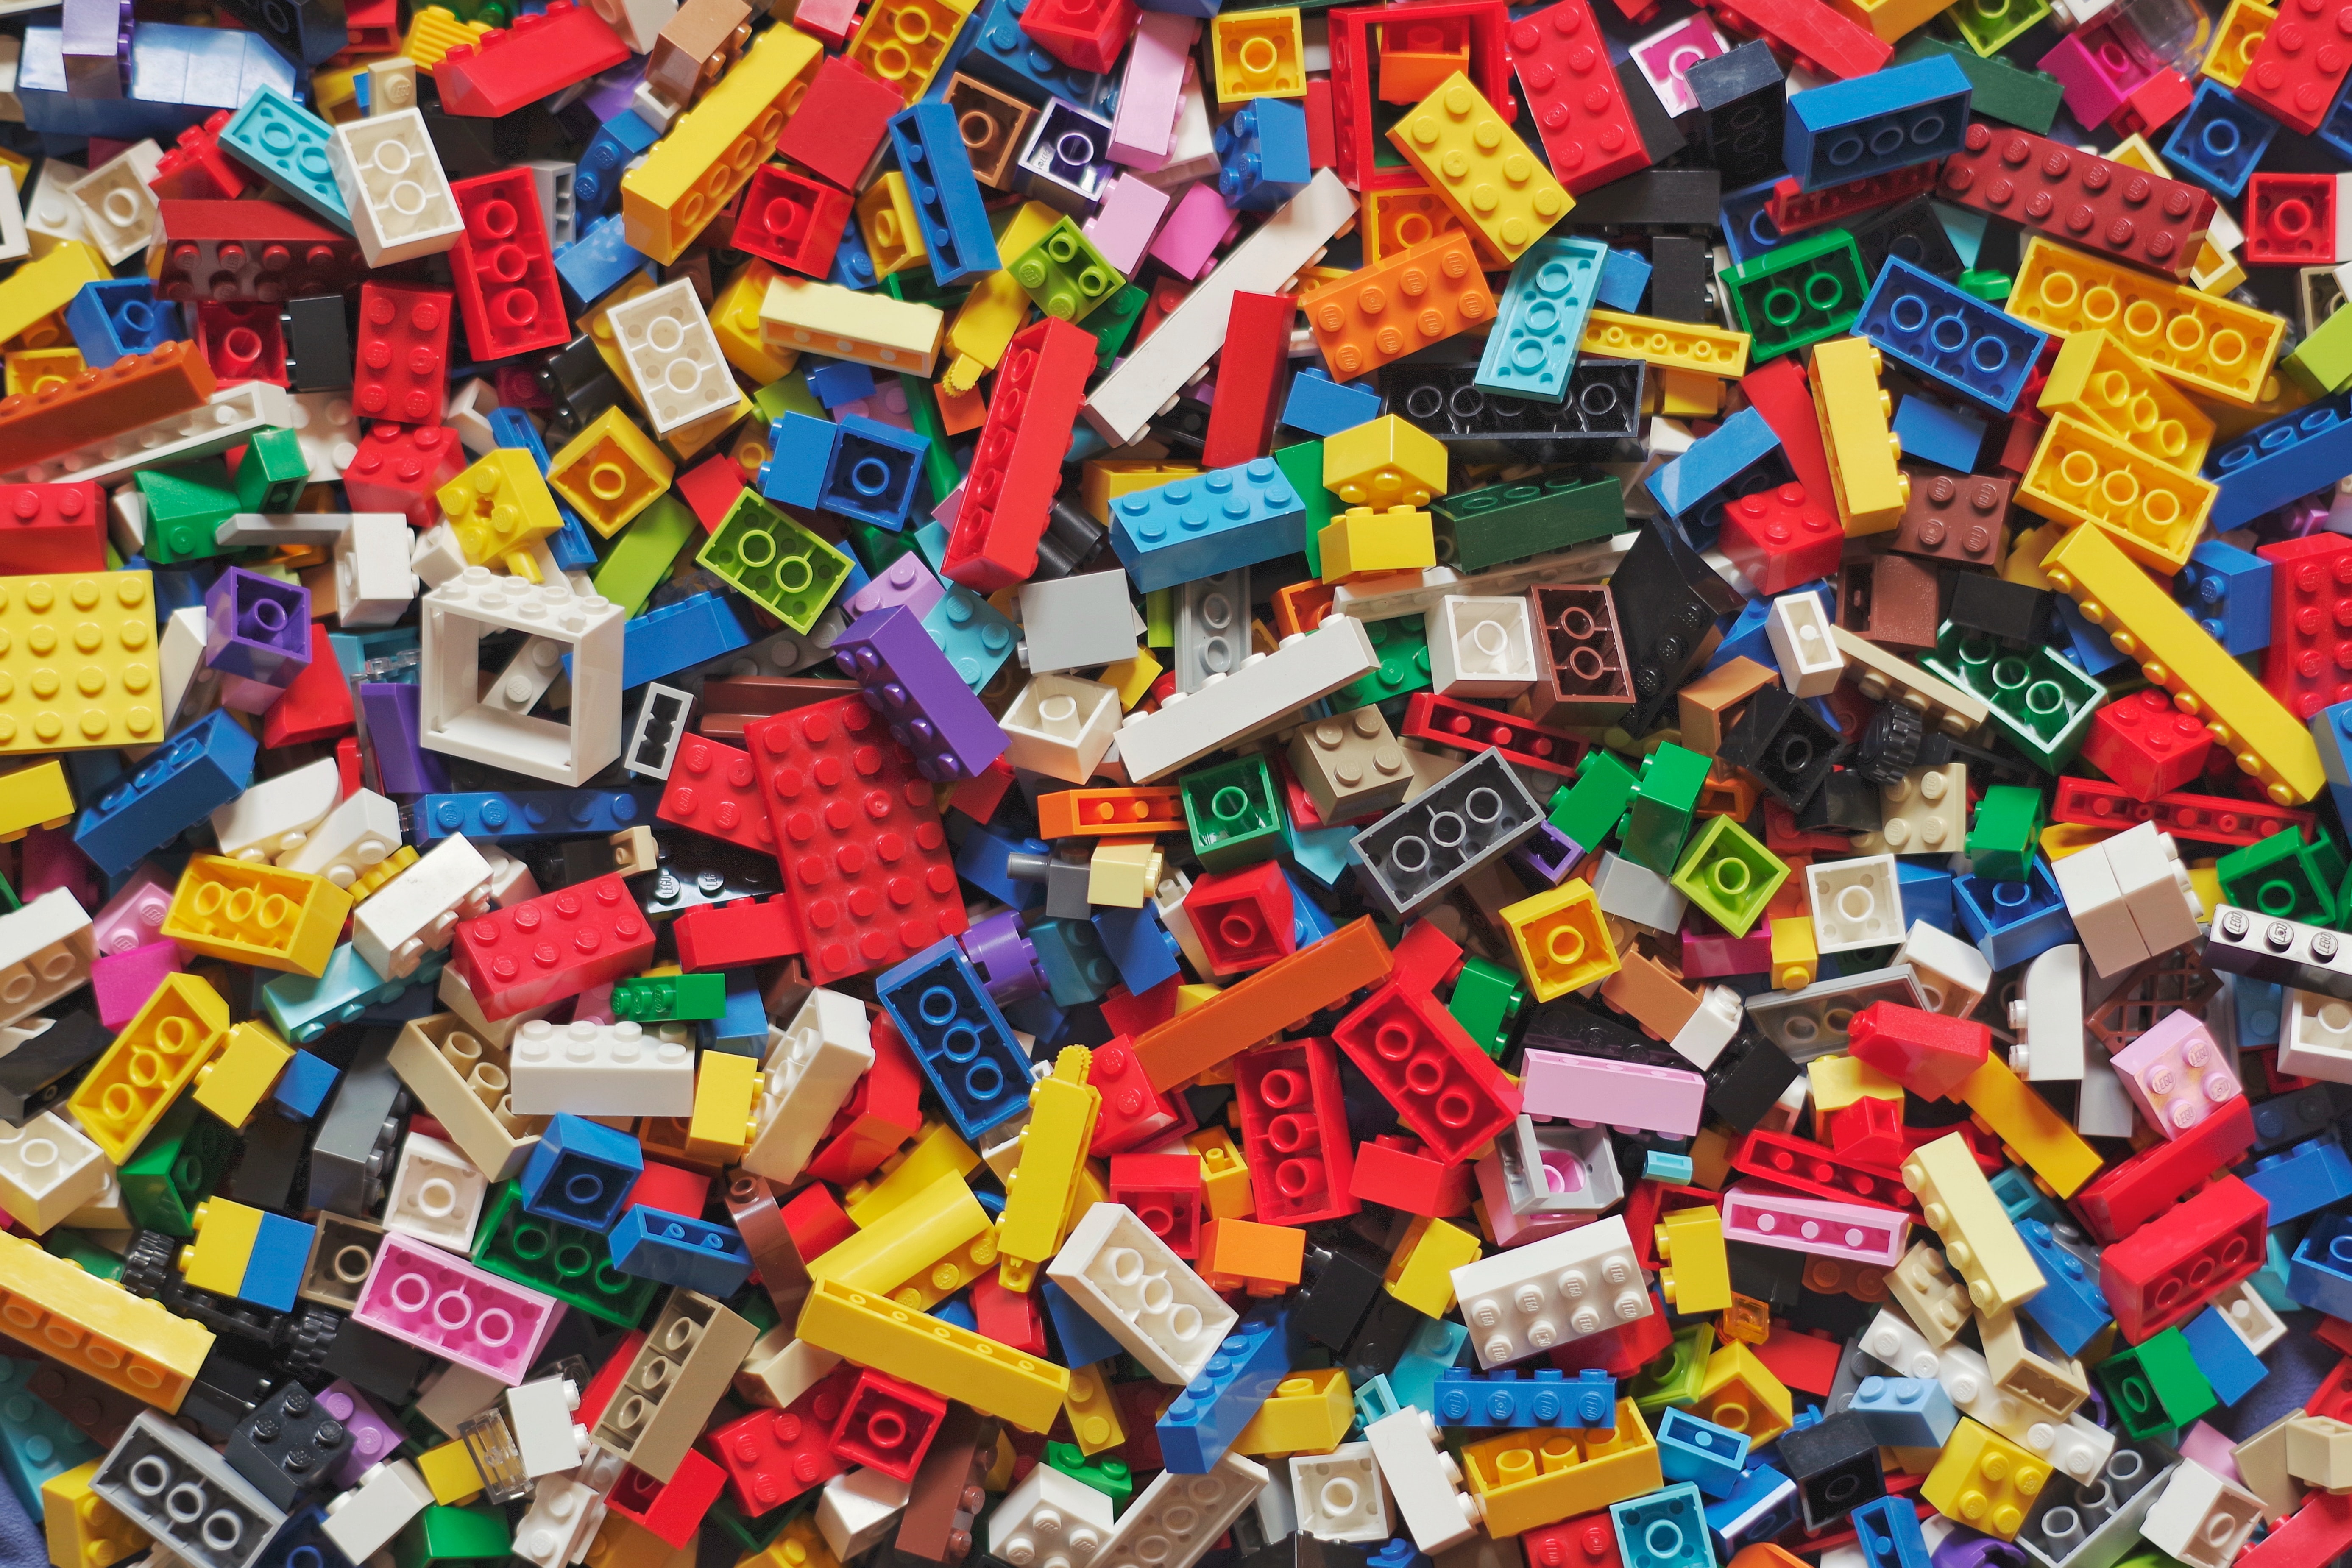 Rainbow colored LEGO